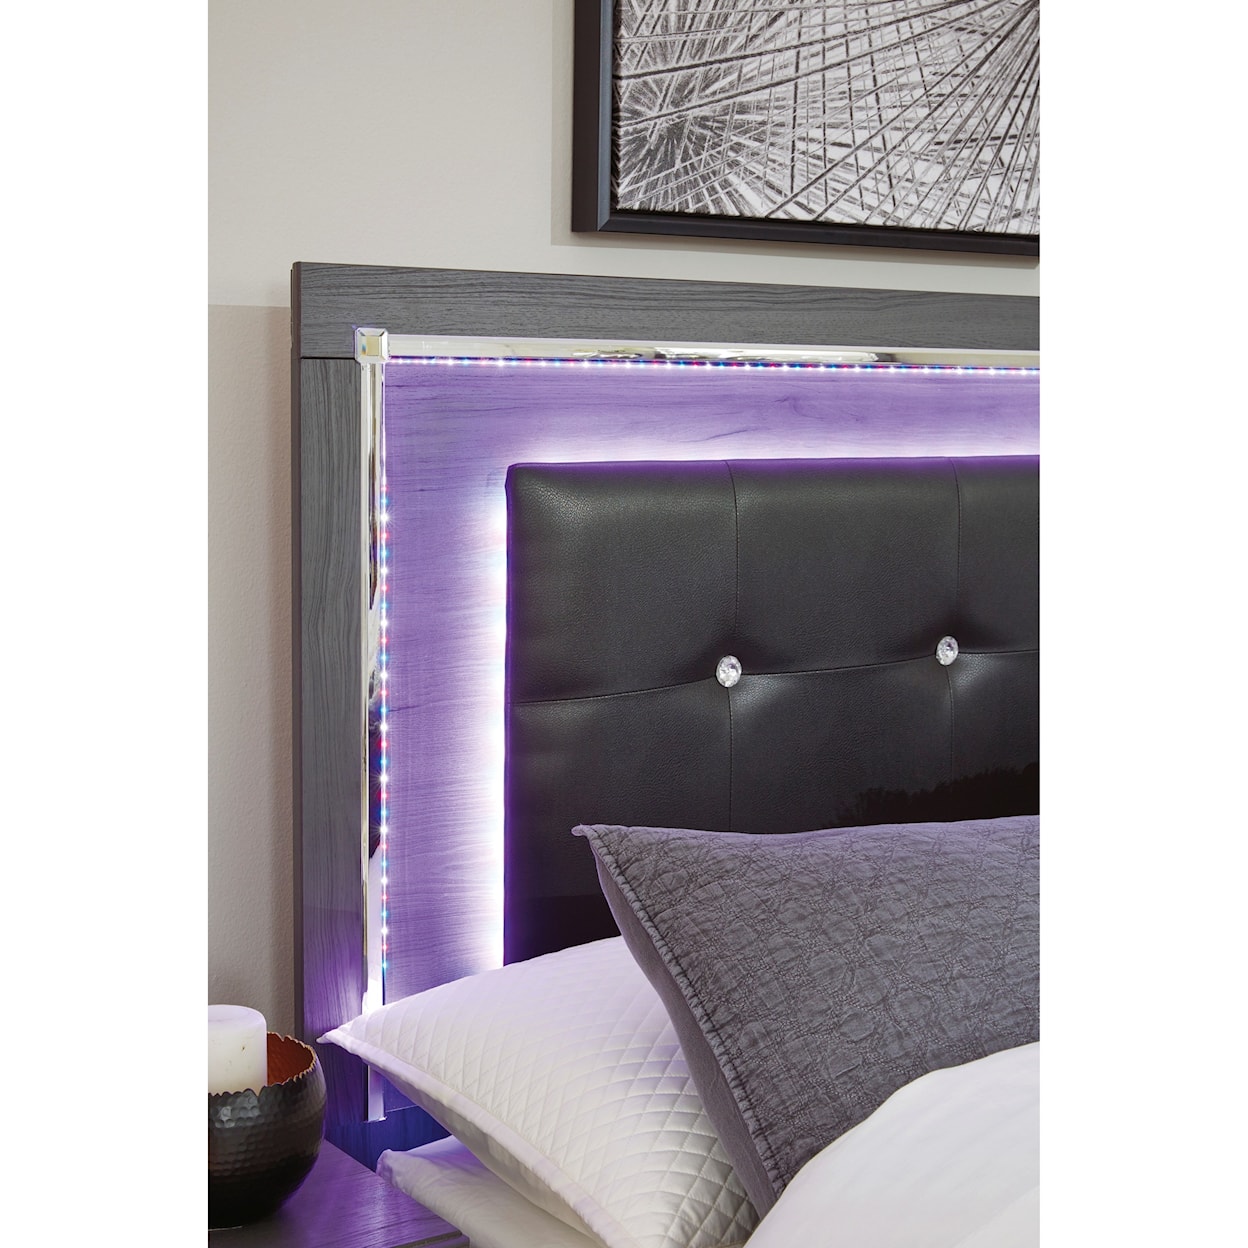 Ashley Furniture Signature Design Lodanna King Platform Bed